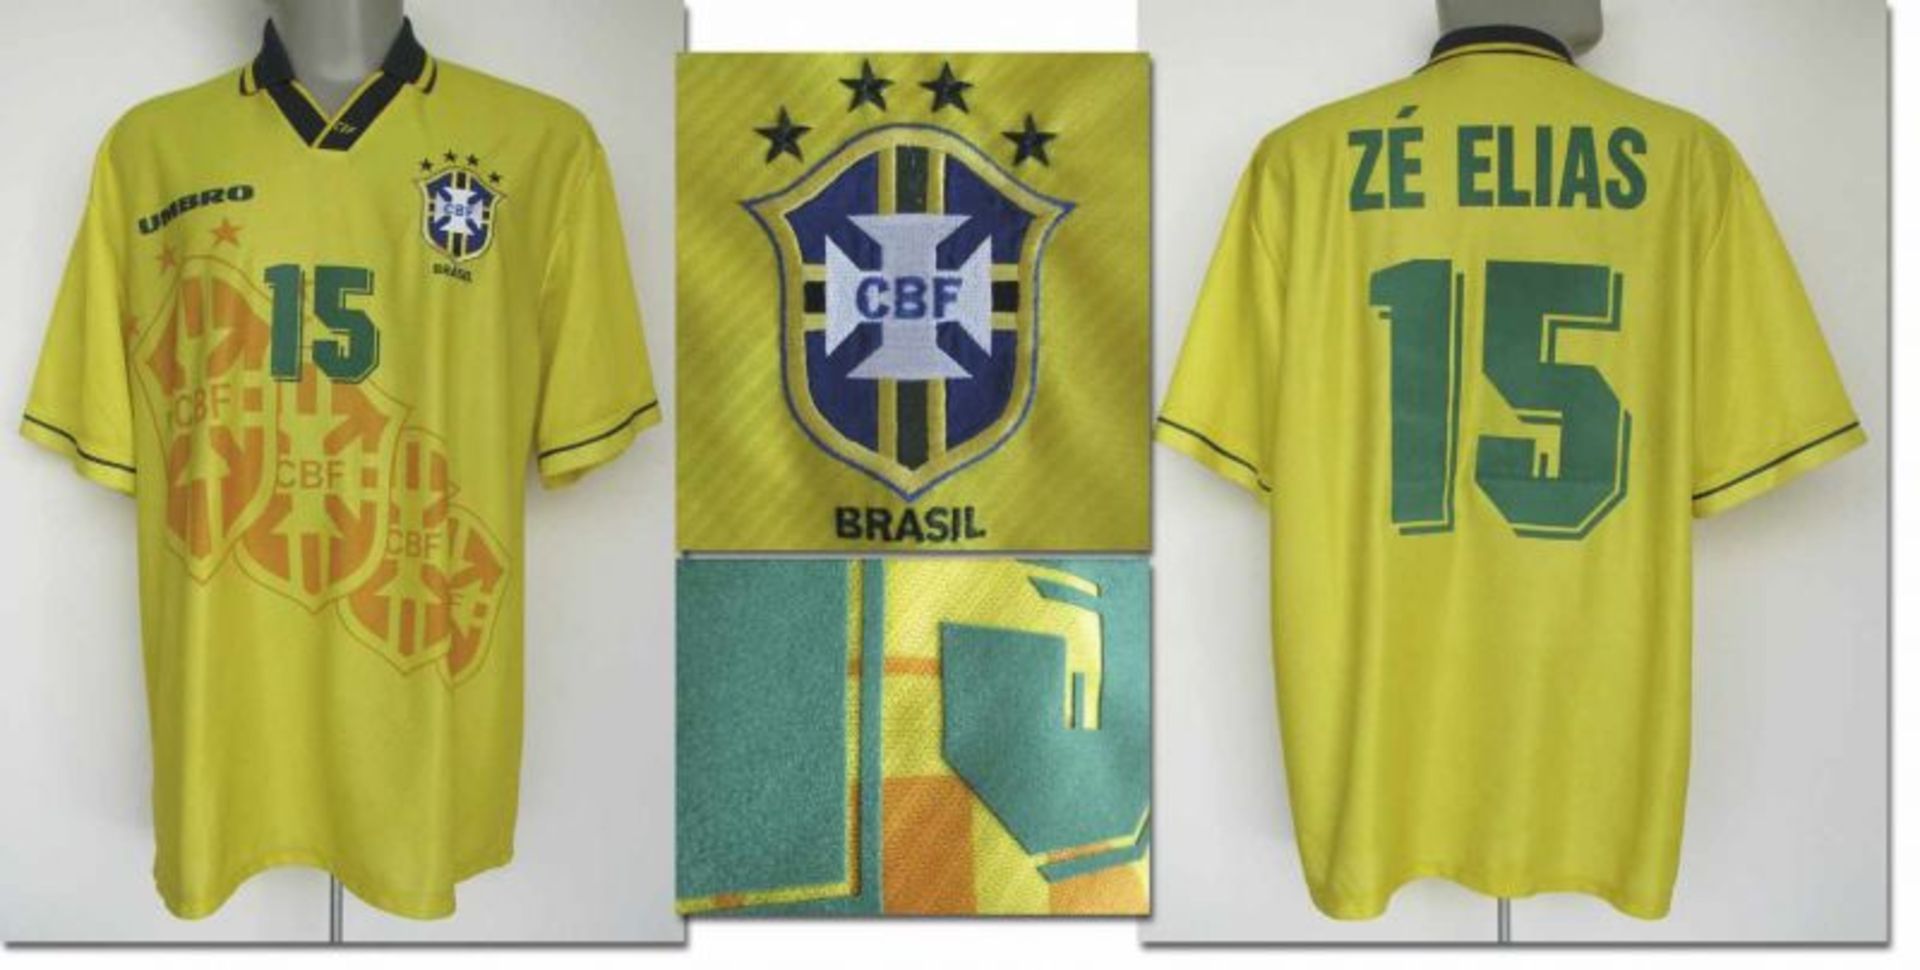 Olympics 1996 match worn football shirt Brazil - Original match worn shirt Brazil with number 15.